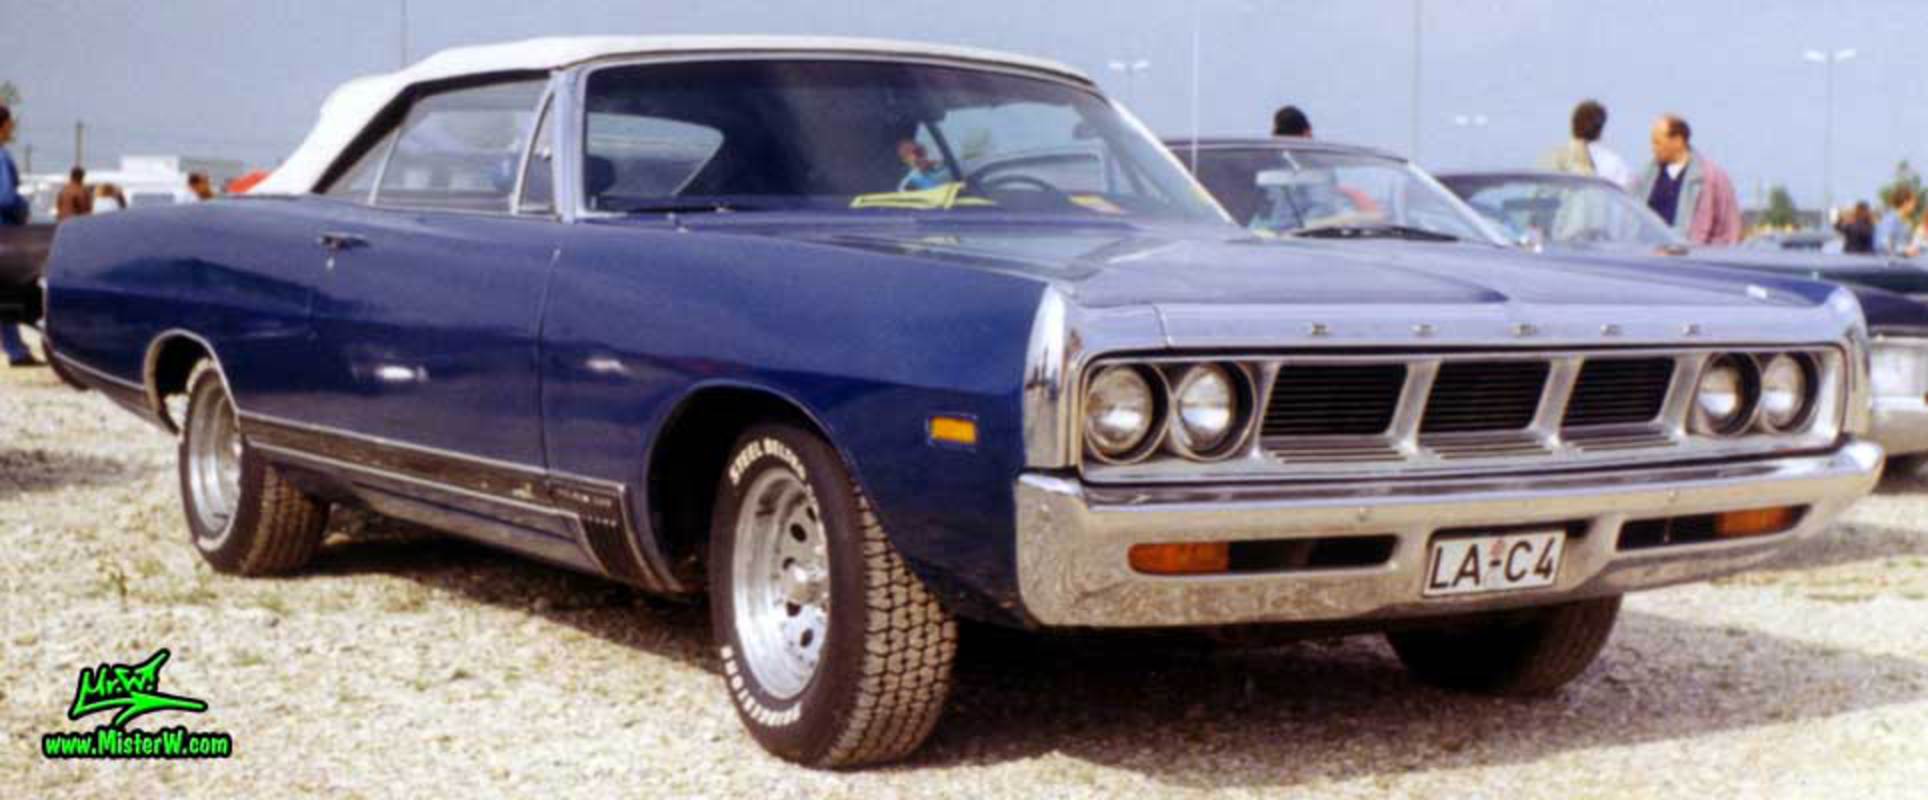 1969 Dodge Cabriolet Frontview